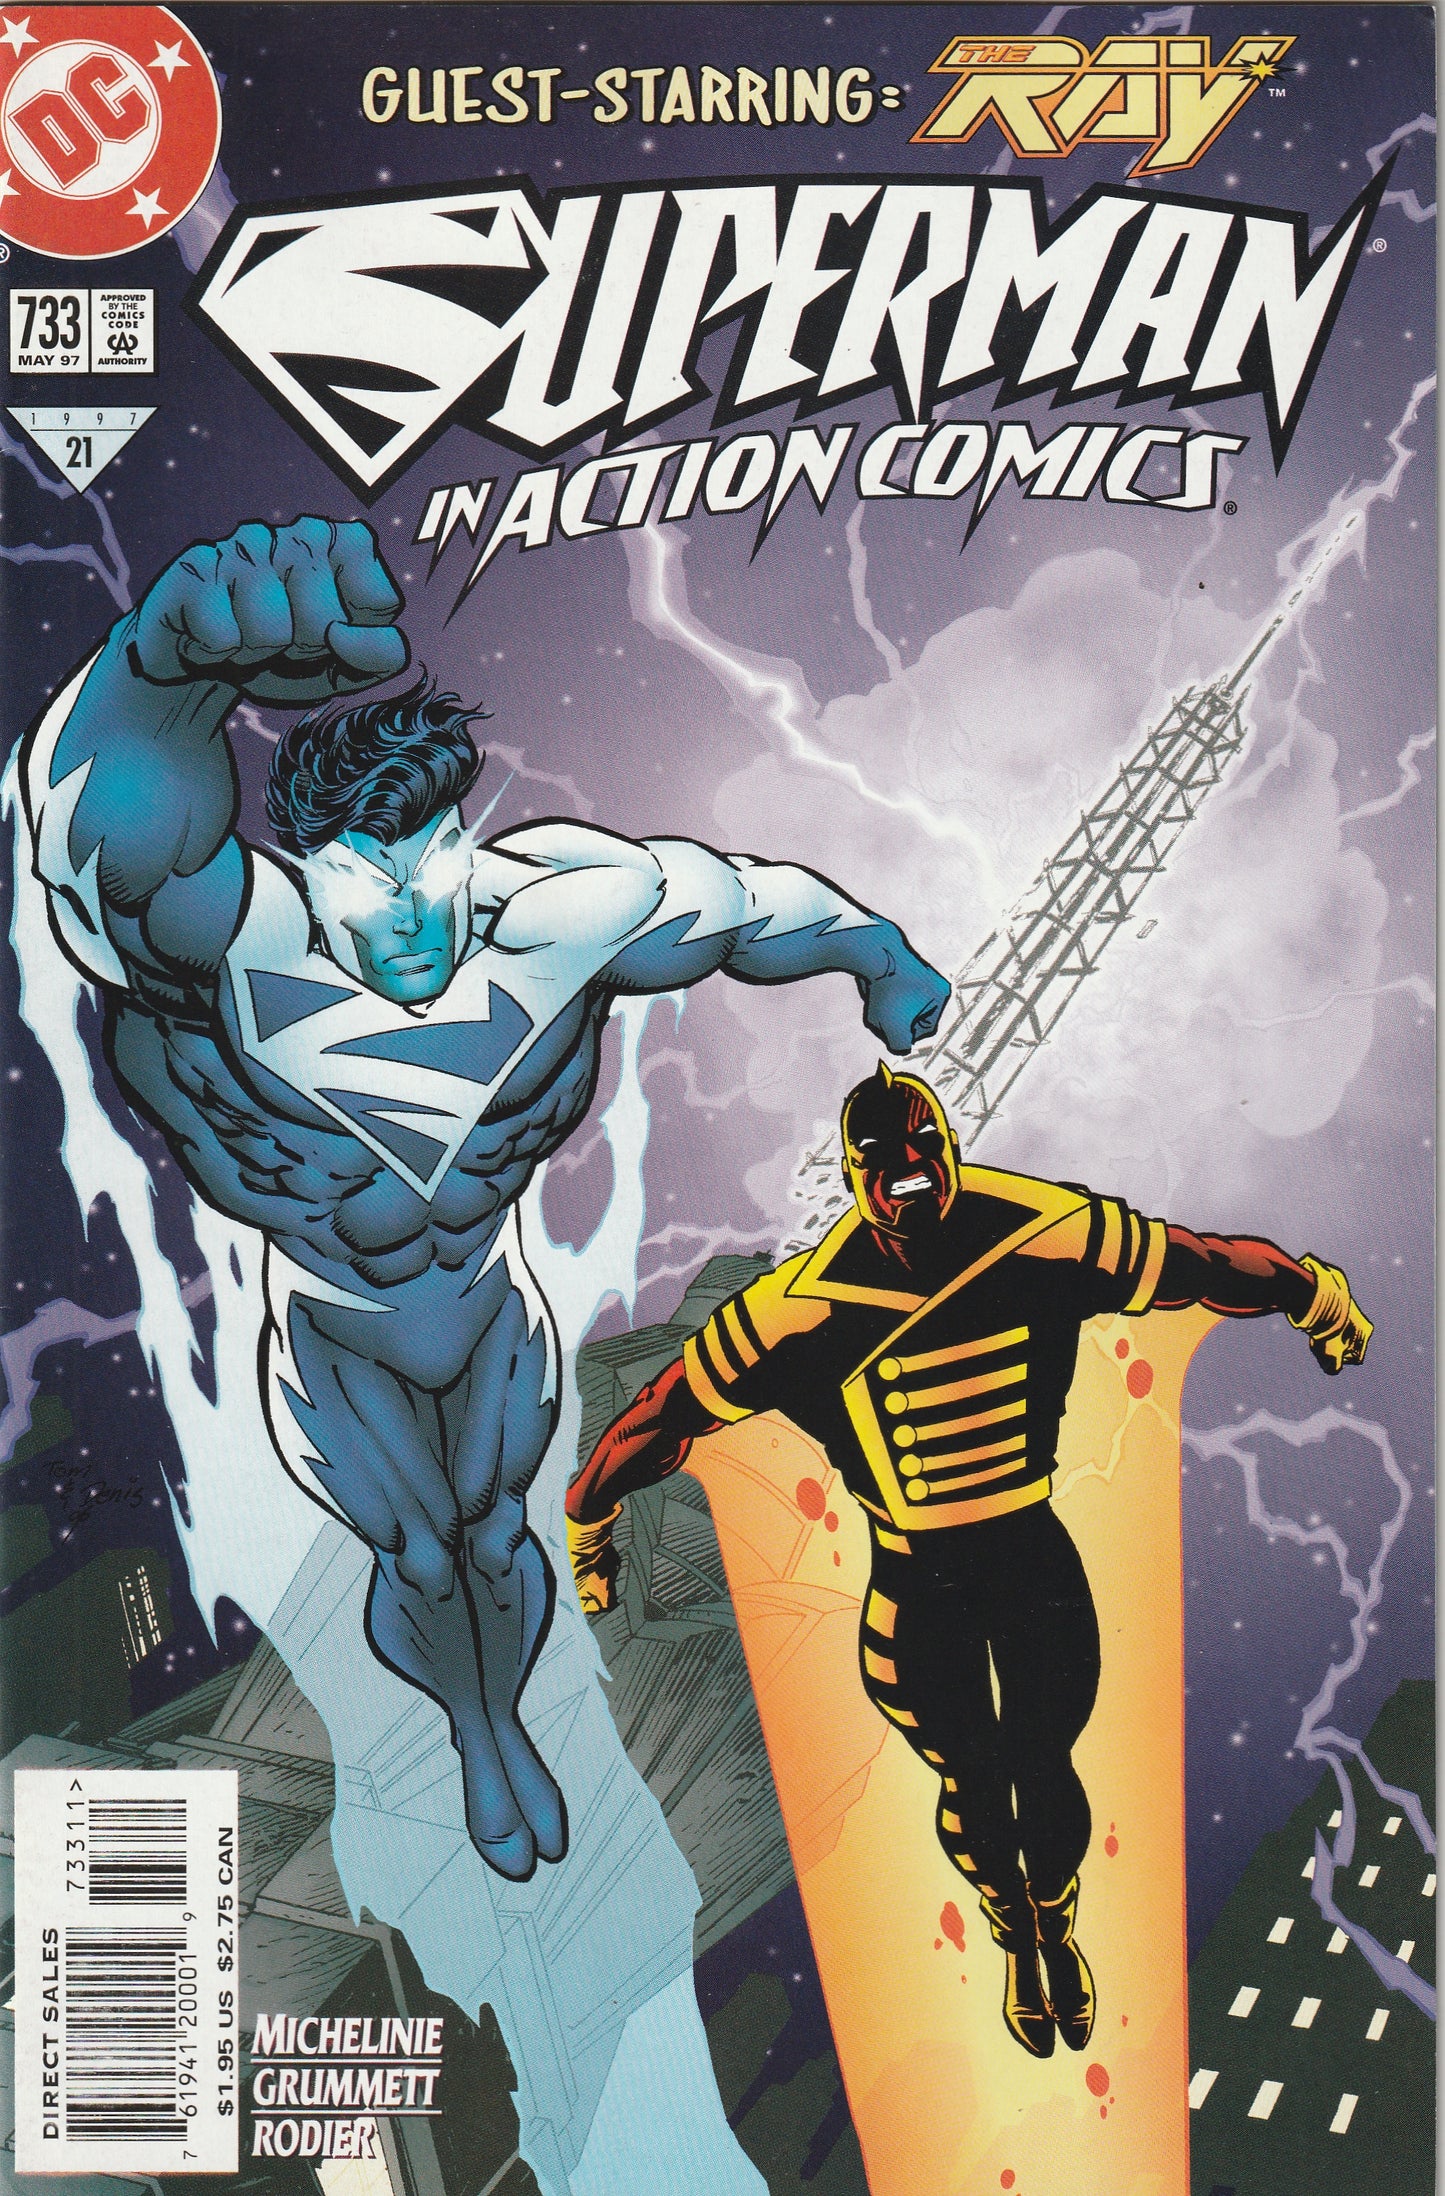 Action Comics #733 (1997) - New costume!